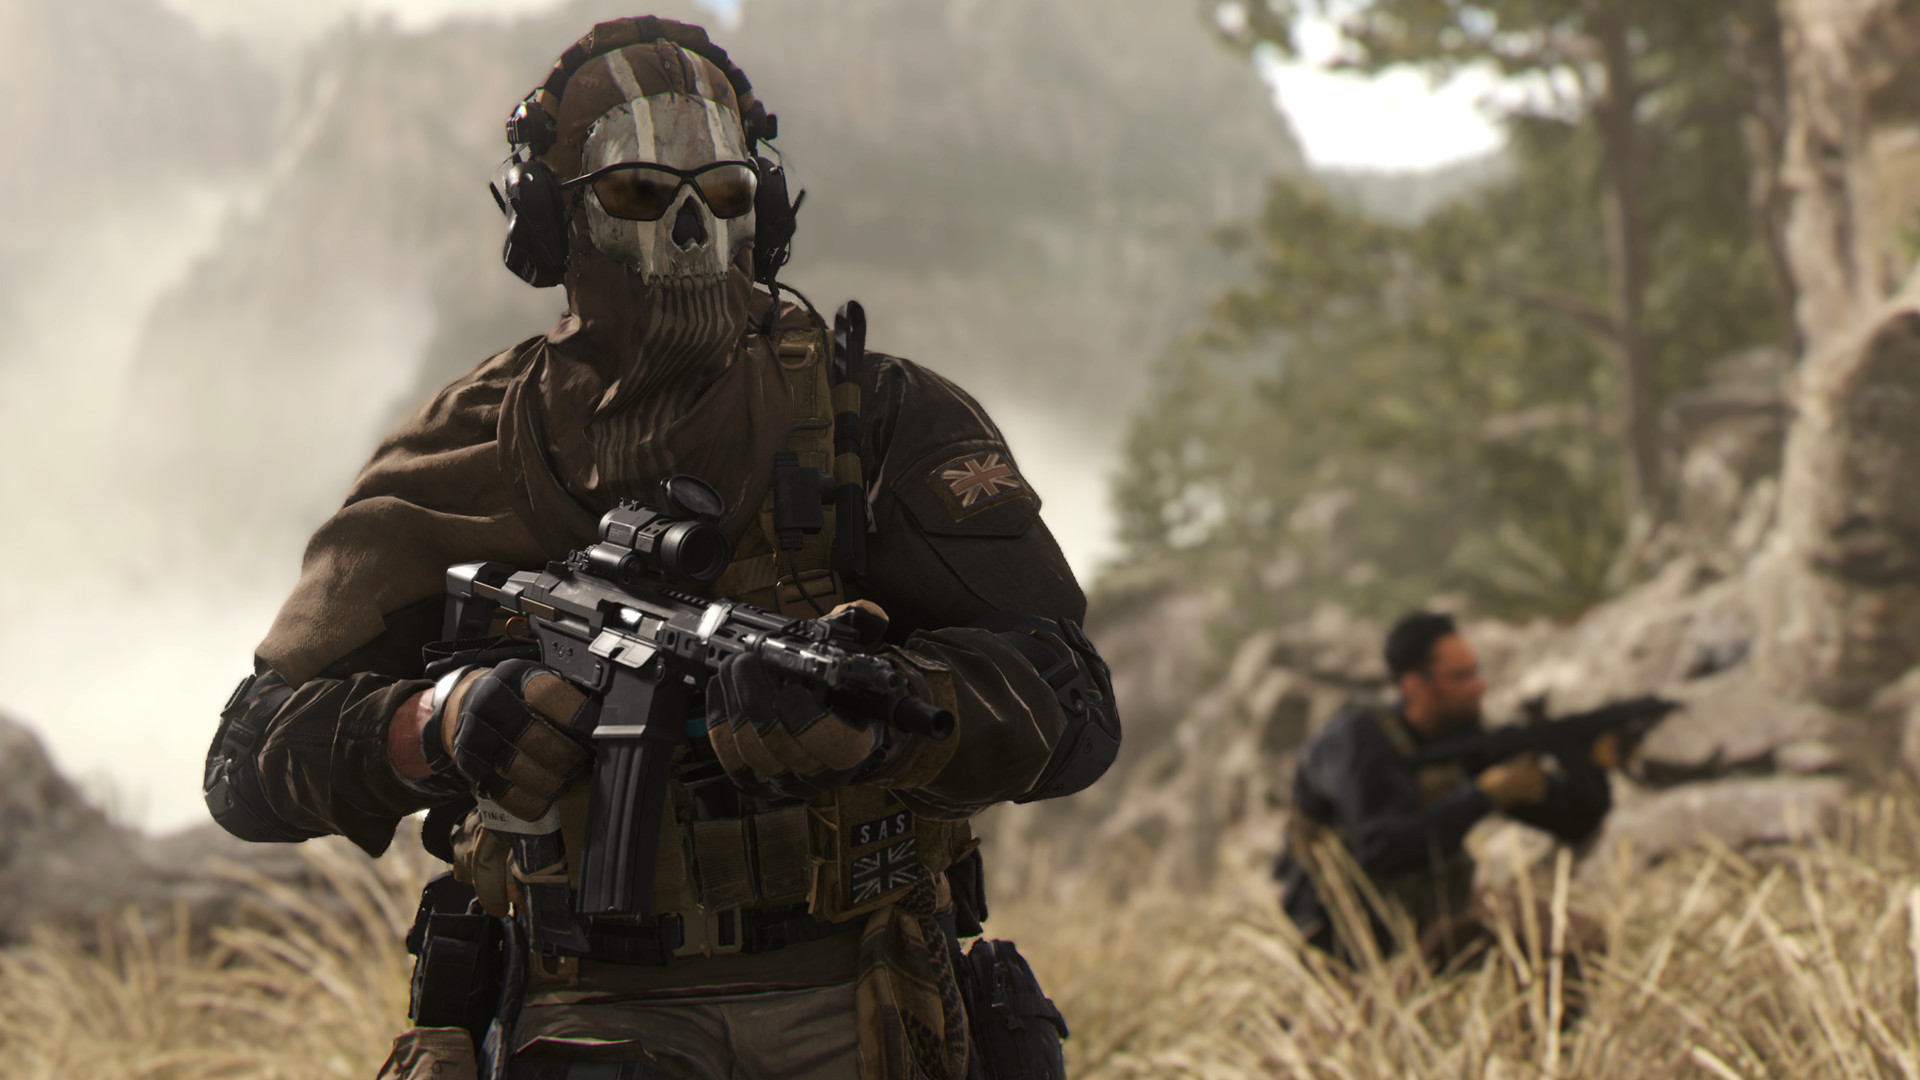 Call Of Duty: Modern Warfare 2 Gives Digital Pre-Order Details